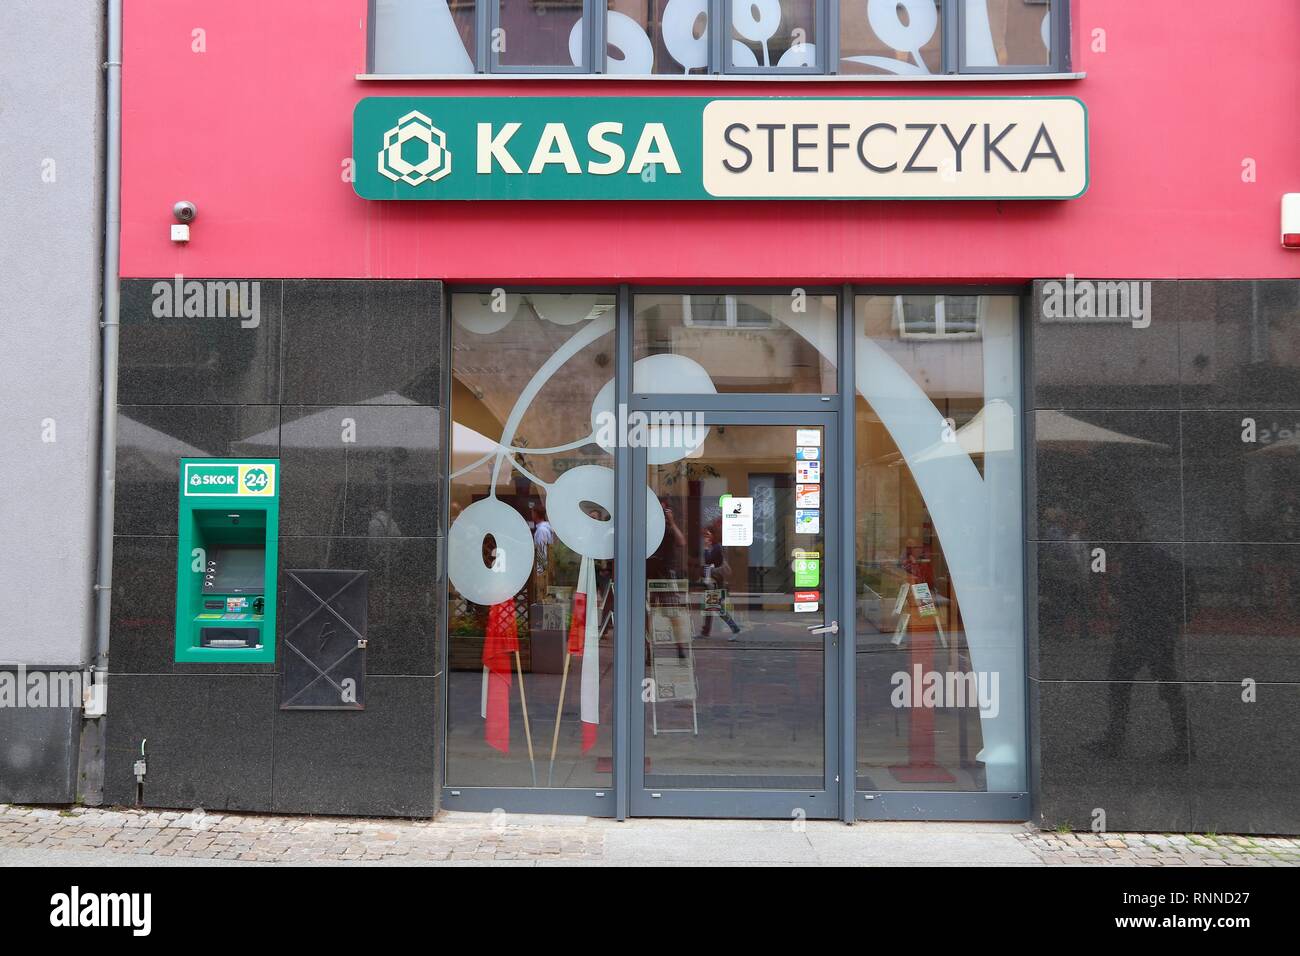 WROCLAW, Pologne - 11 MAI 2018 : Kasa Stefczyka credit union (SKOK) en direction de Wroclaw, Pologne. Kasa Stefczyka a 400 succursales dans toute la Pologne. Banque D'Images